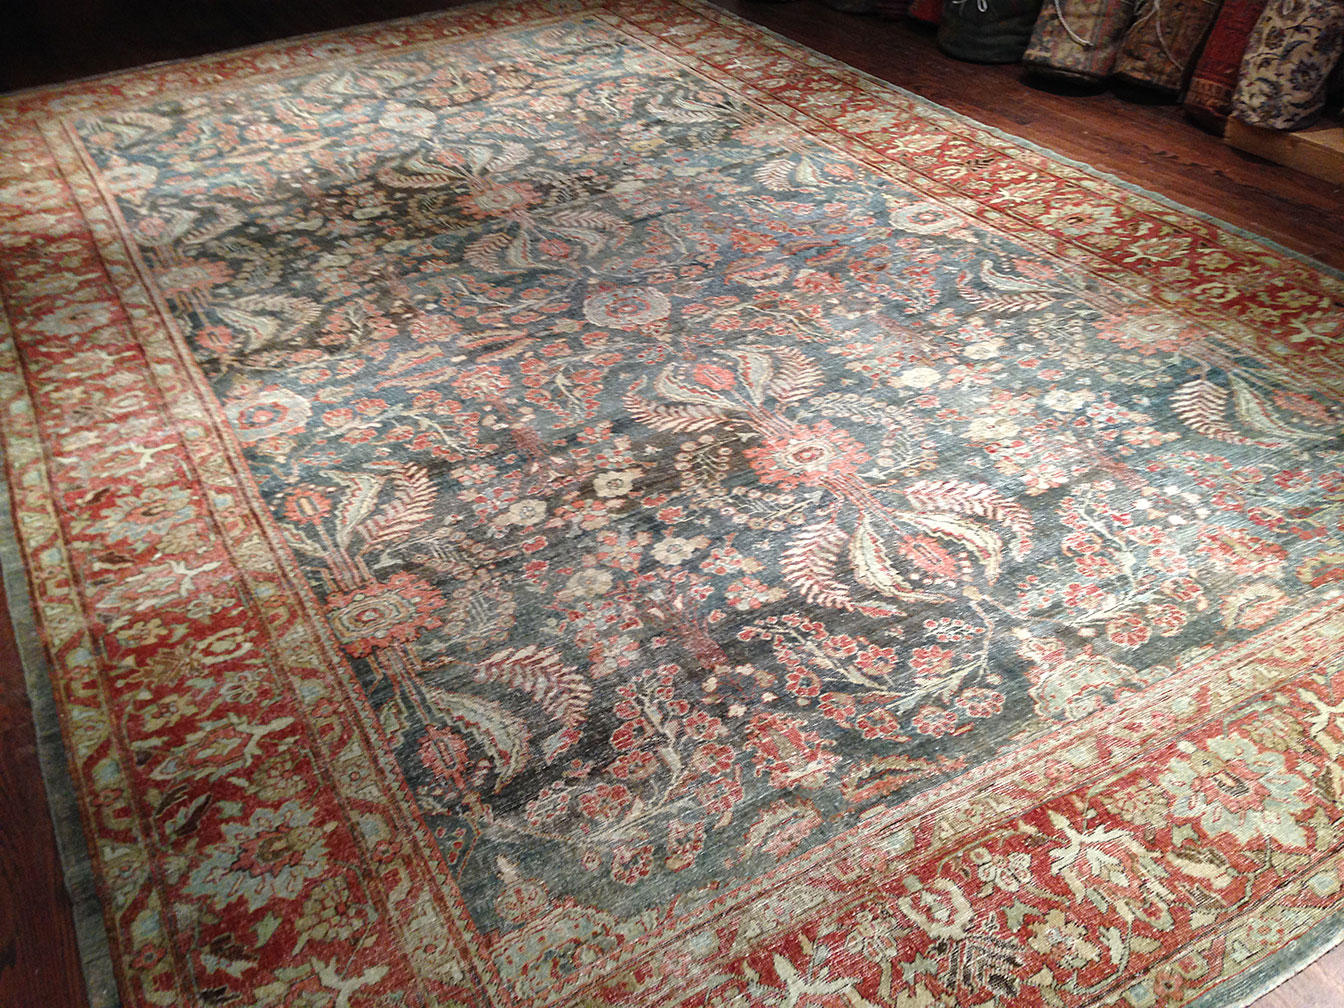 Vintage mahal Carpet - # 50130